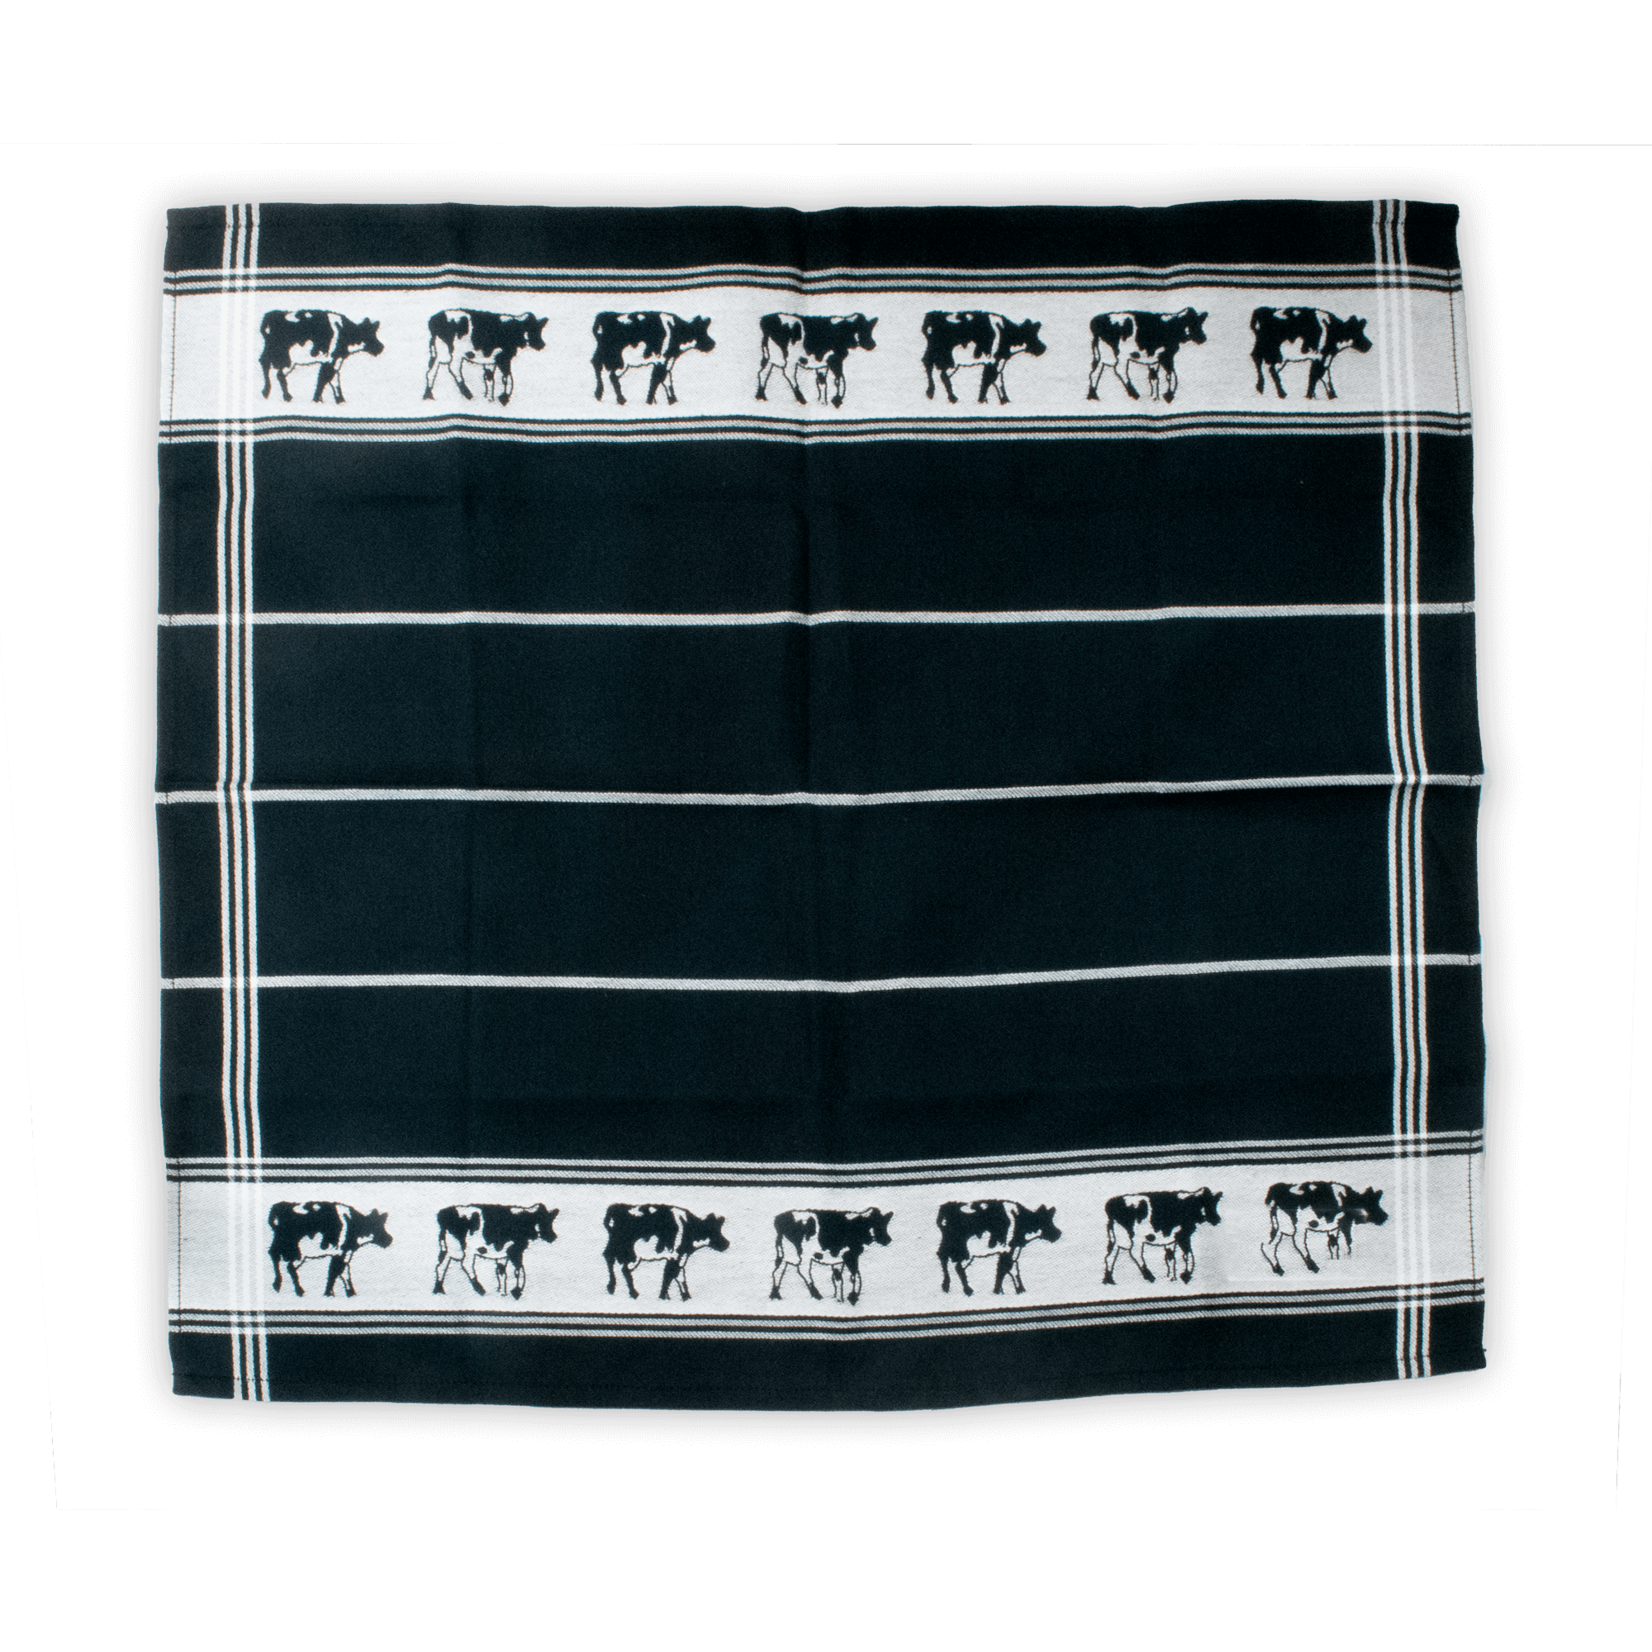 DDDDD DDDDD Tea Towel - Cow Black/White (Bont)